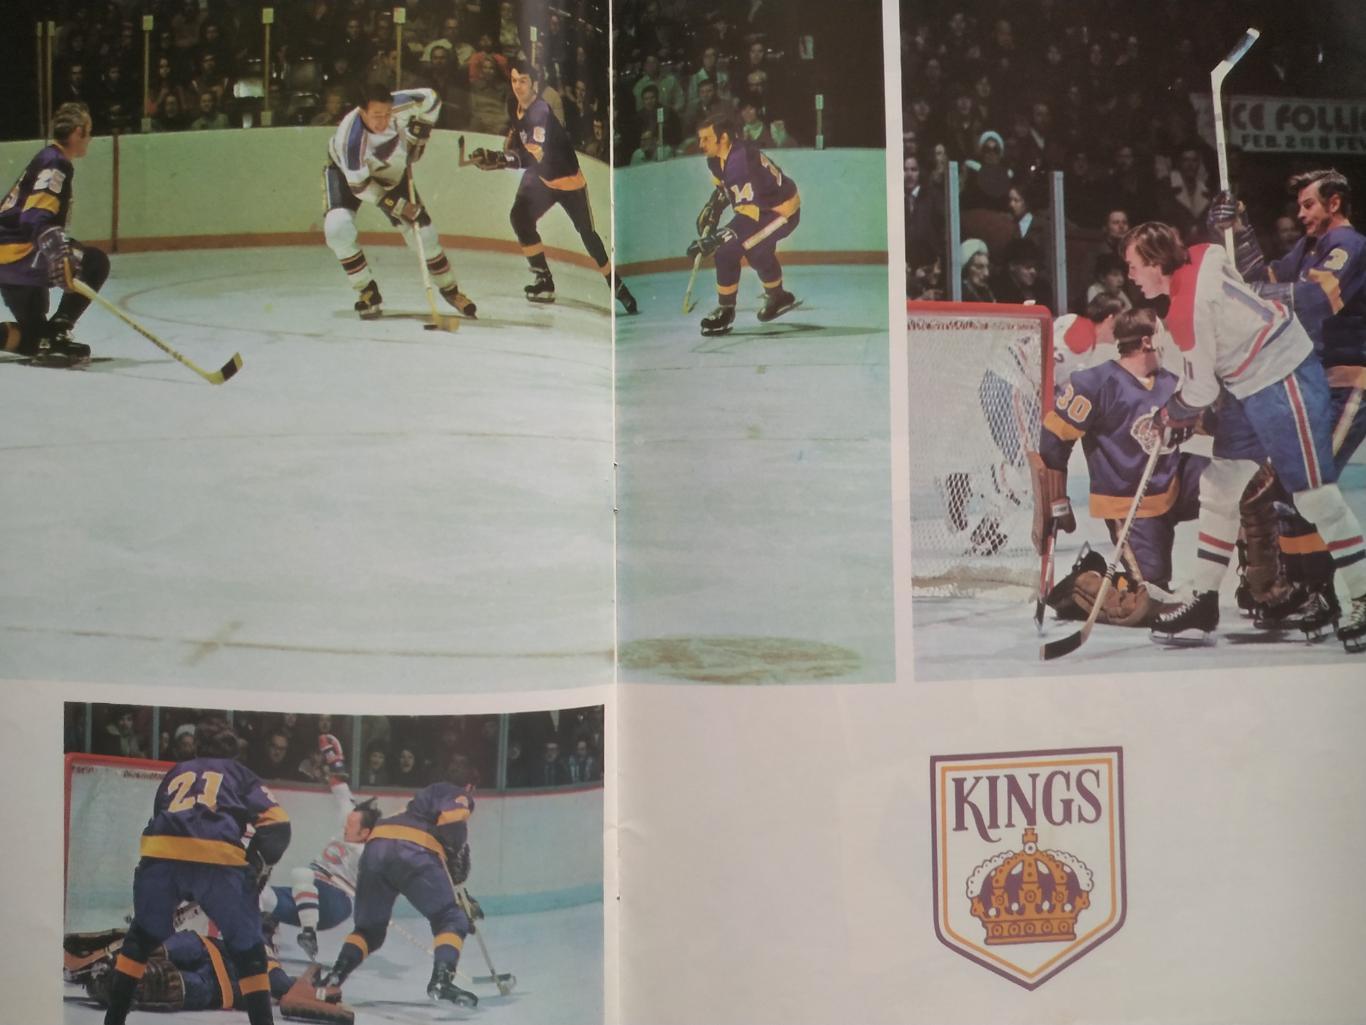 ХОККЕЙ ПРОГРАММА АЛЬБОМ ЛОС АНДЖЕЛЕС НХЛ NHL 1971 DEC.01 LOS ANGELES PROGRAM 4